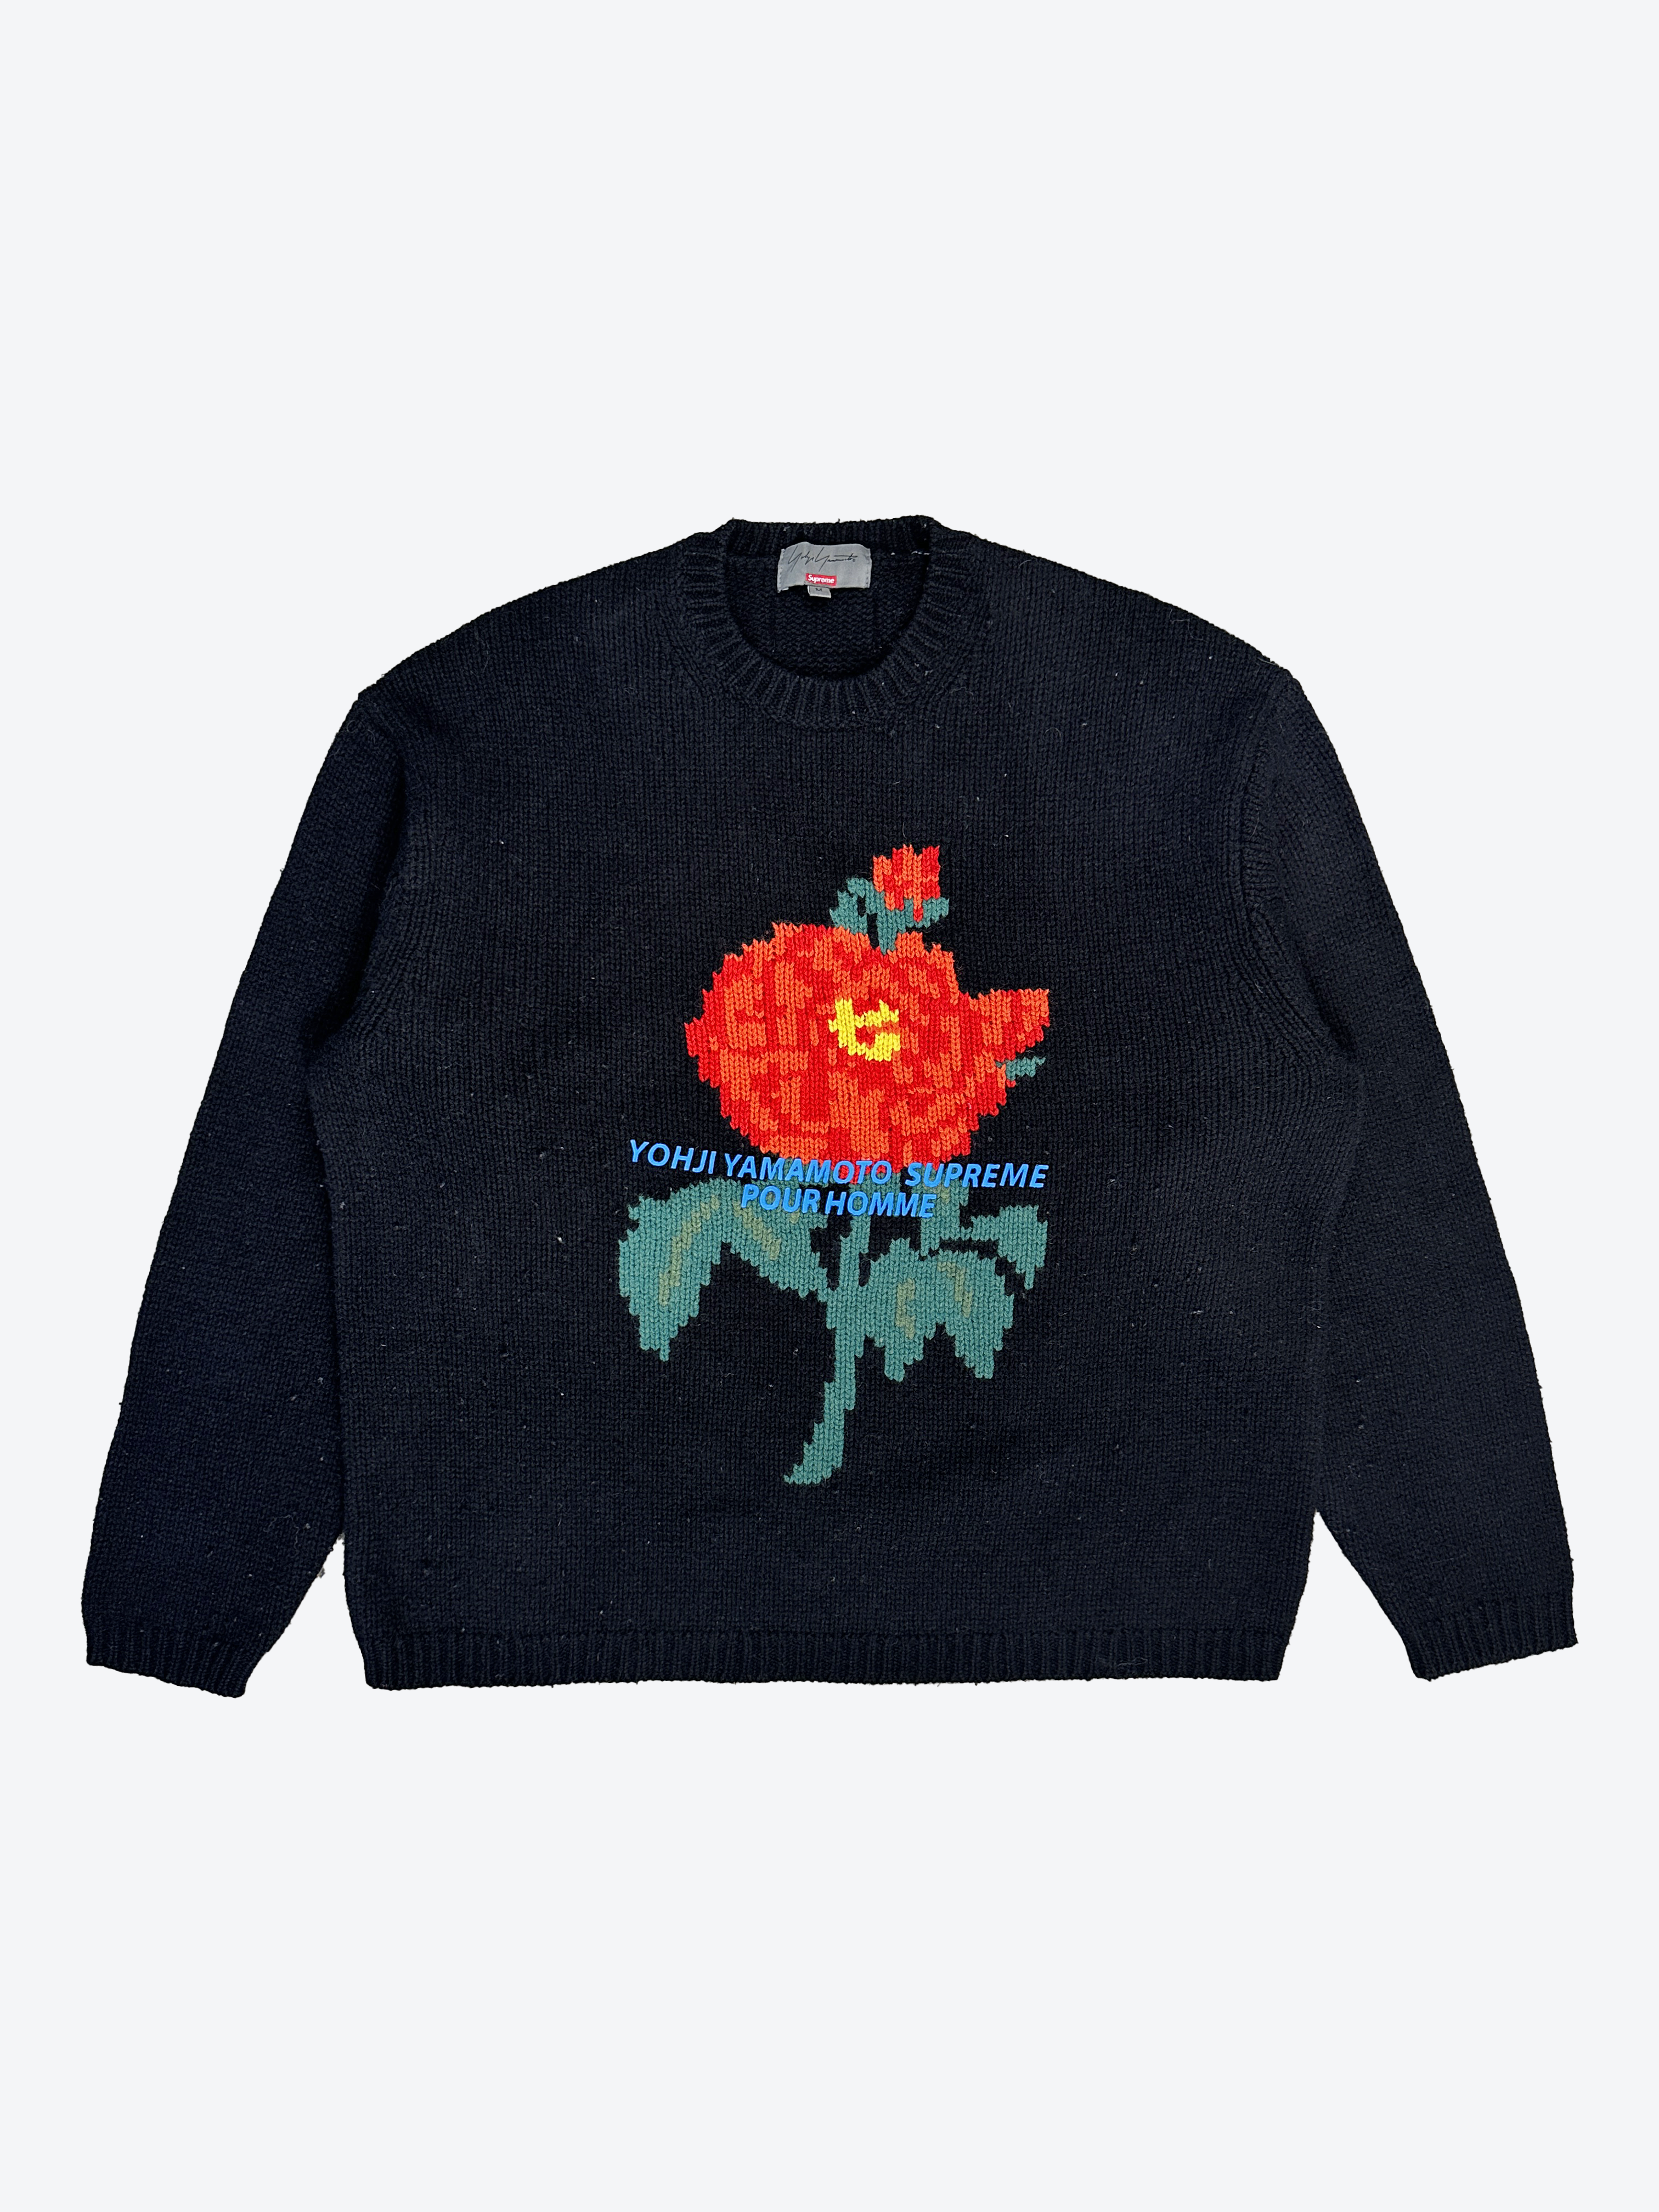 Yohji Yamamoto x Supreme Floral Sweater